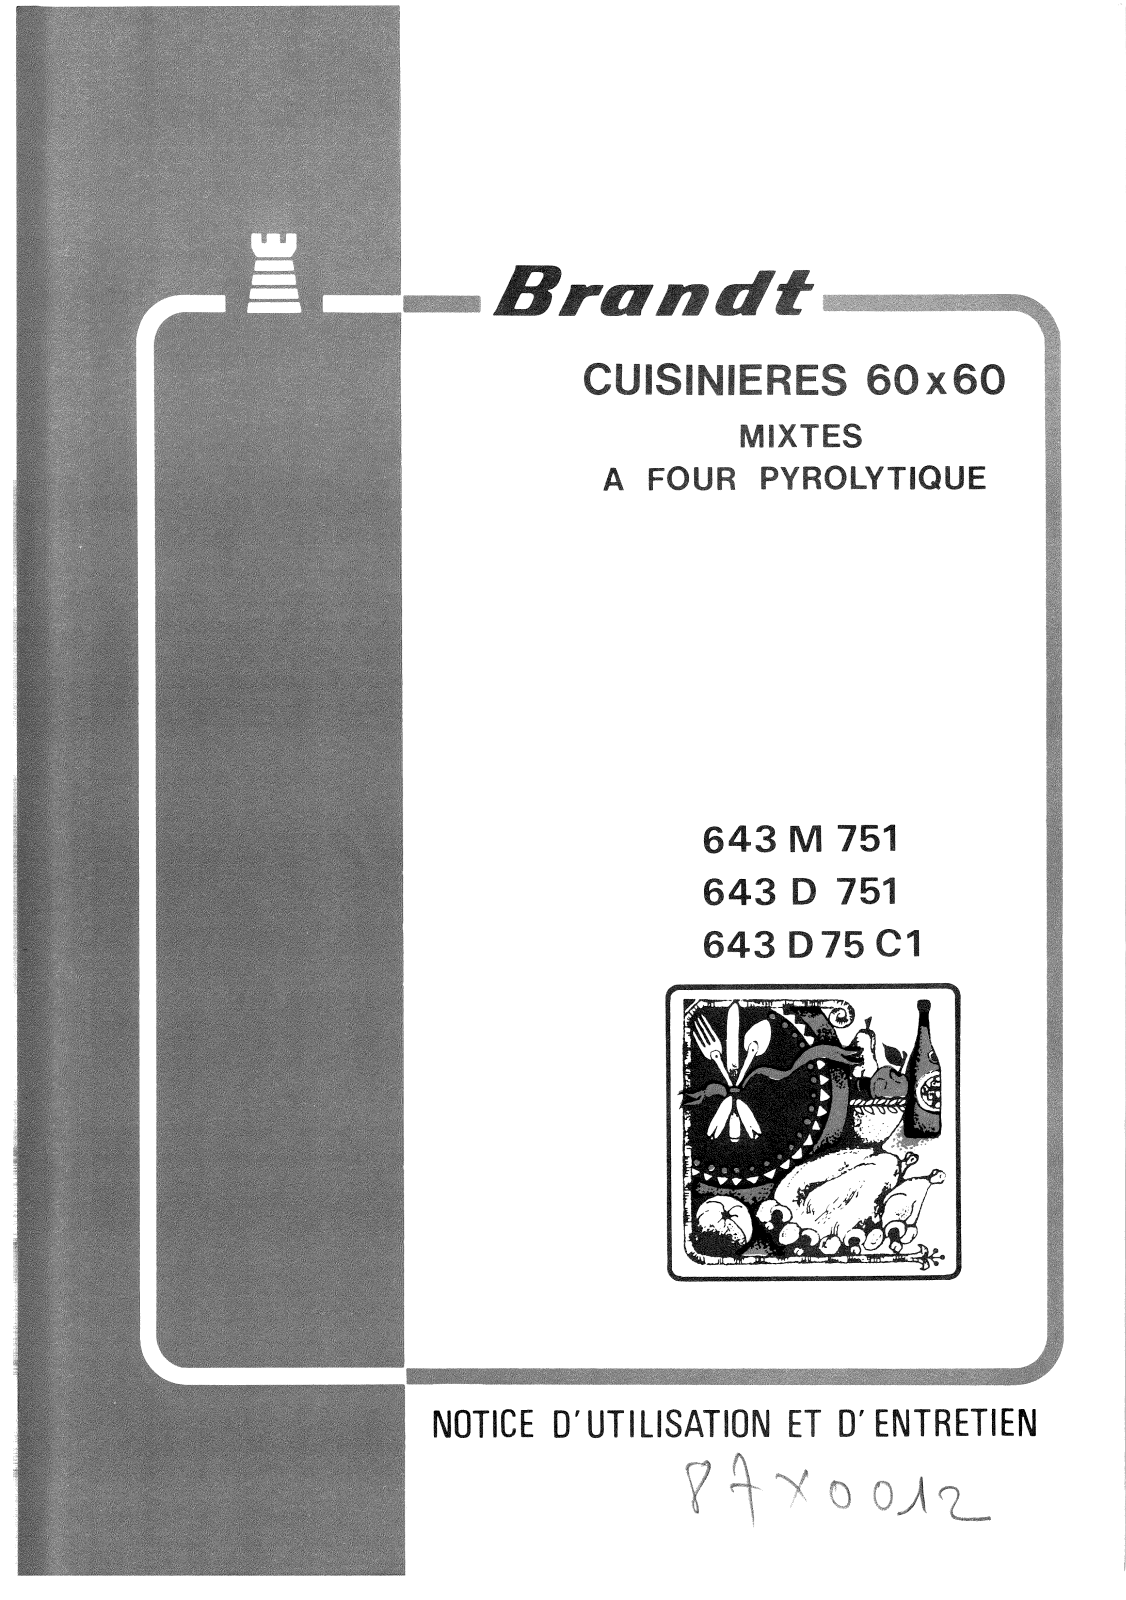 BRANDT 643D75 User Manual